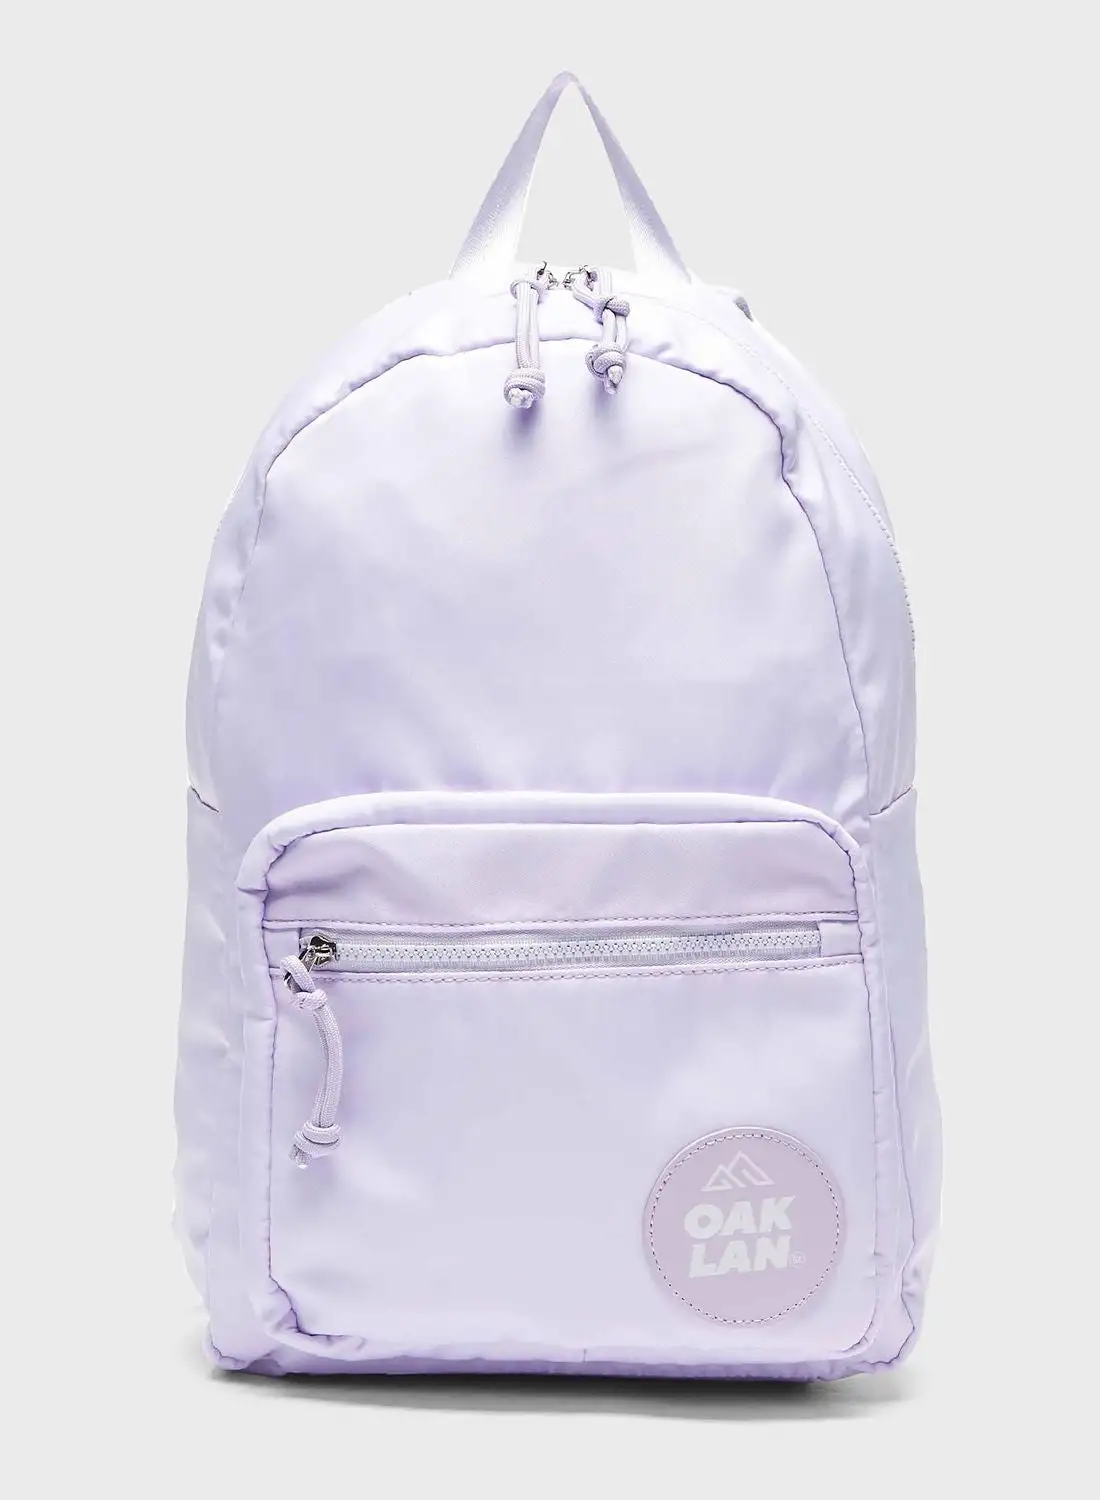 Oaklan by Shoexpress Logo Printed Backpack